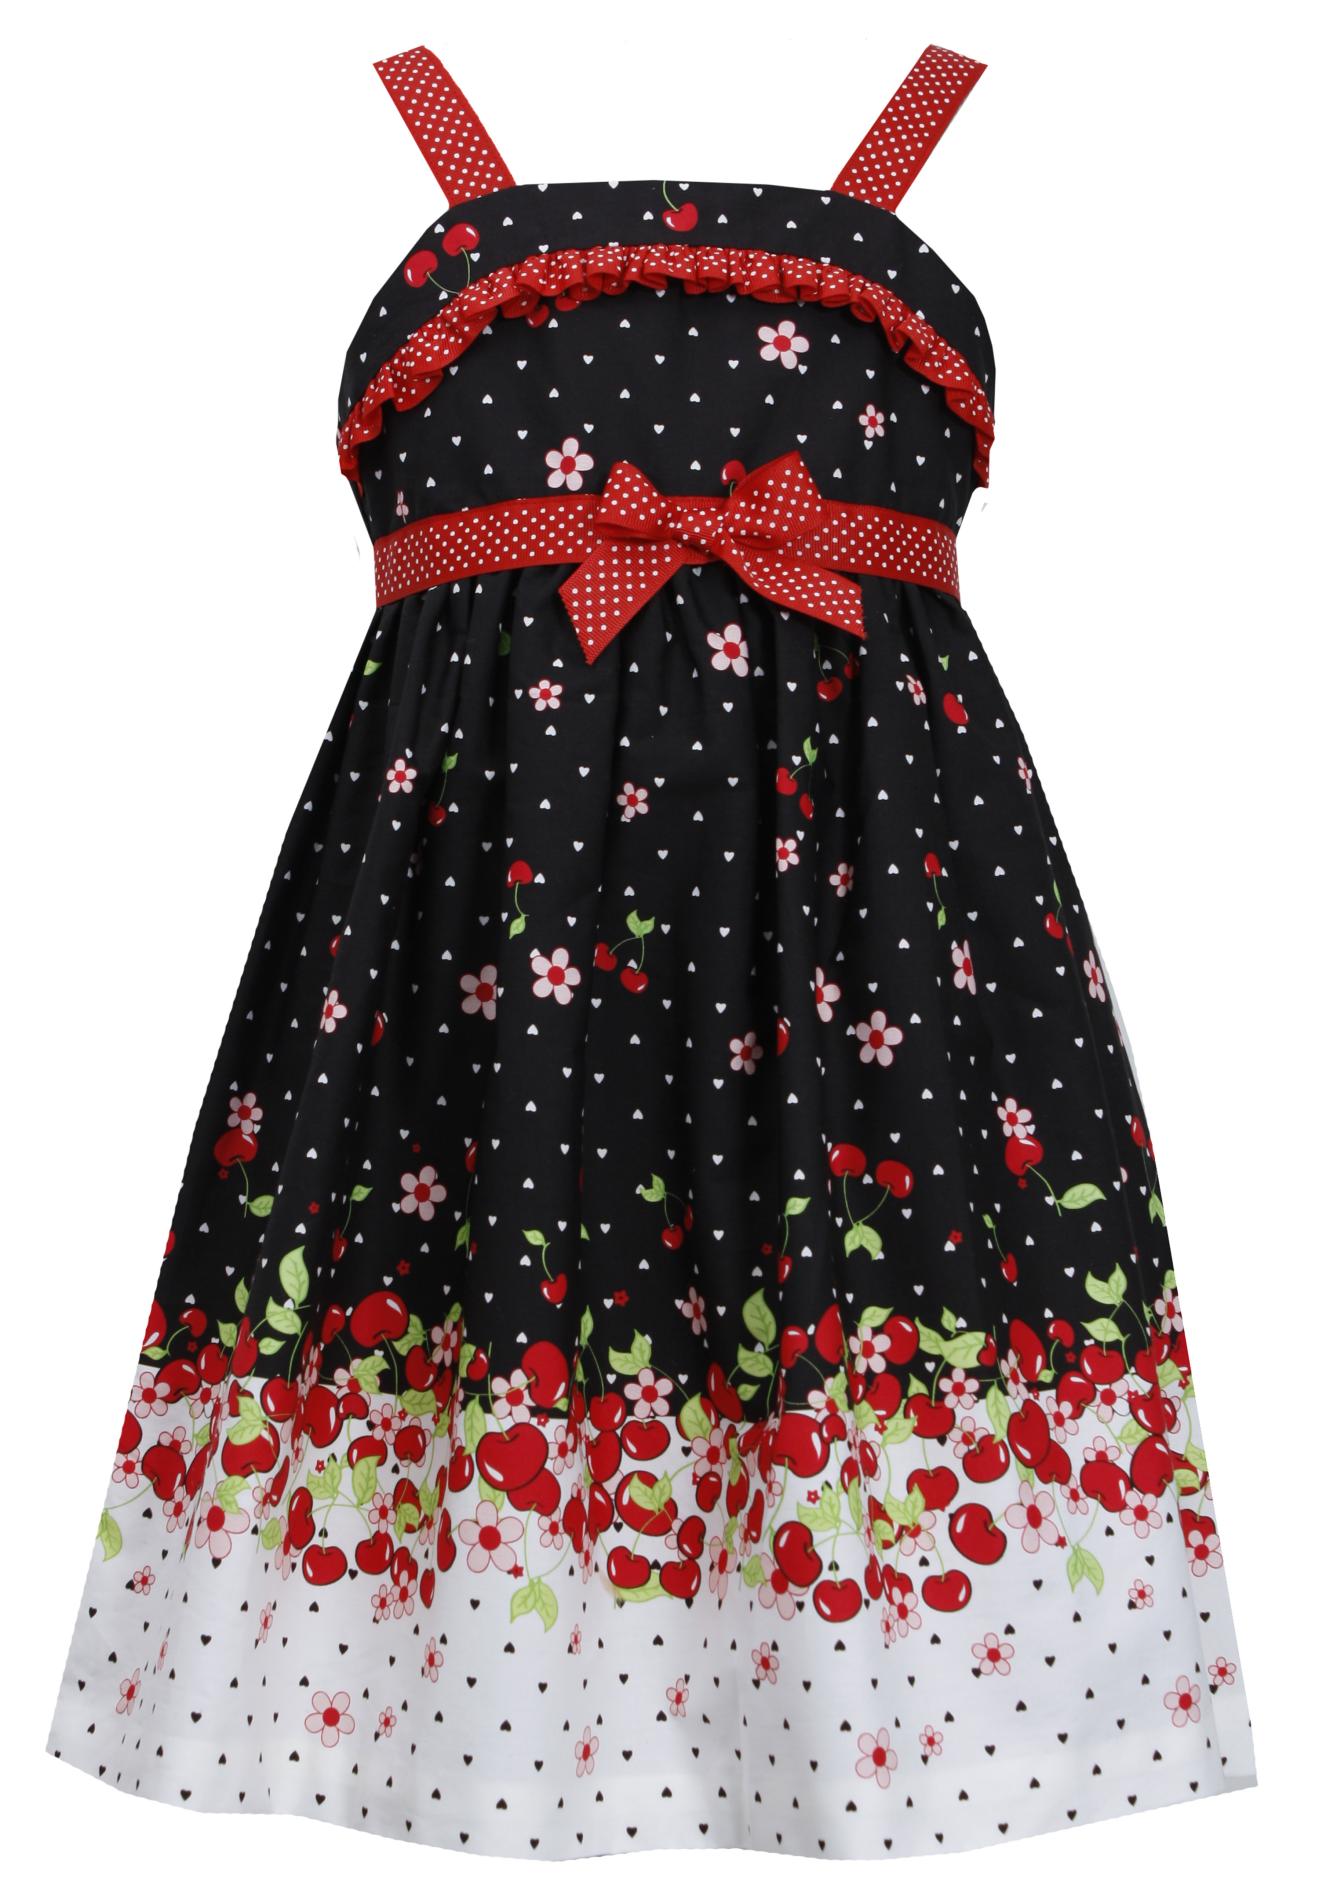 Ashley Ann Girl's Sleeveless Dress - Cherry Print